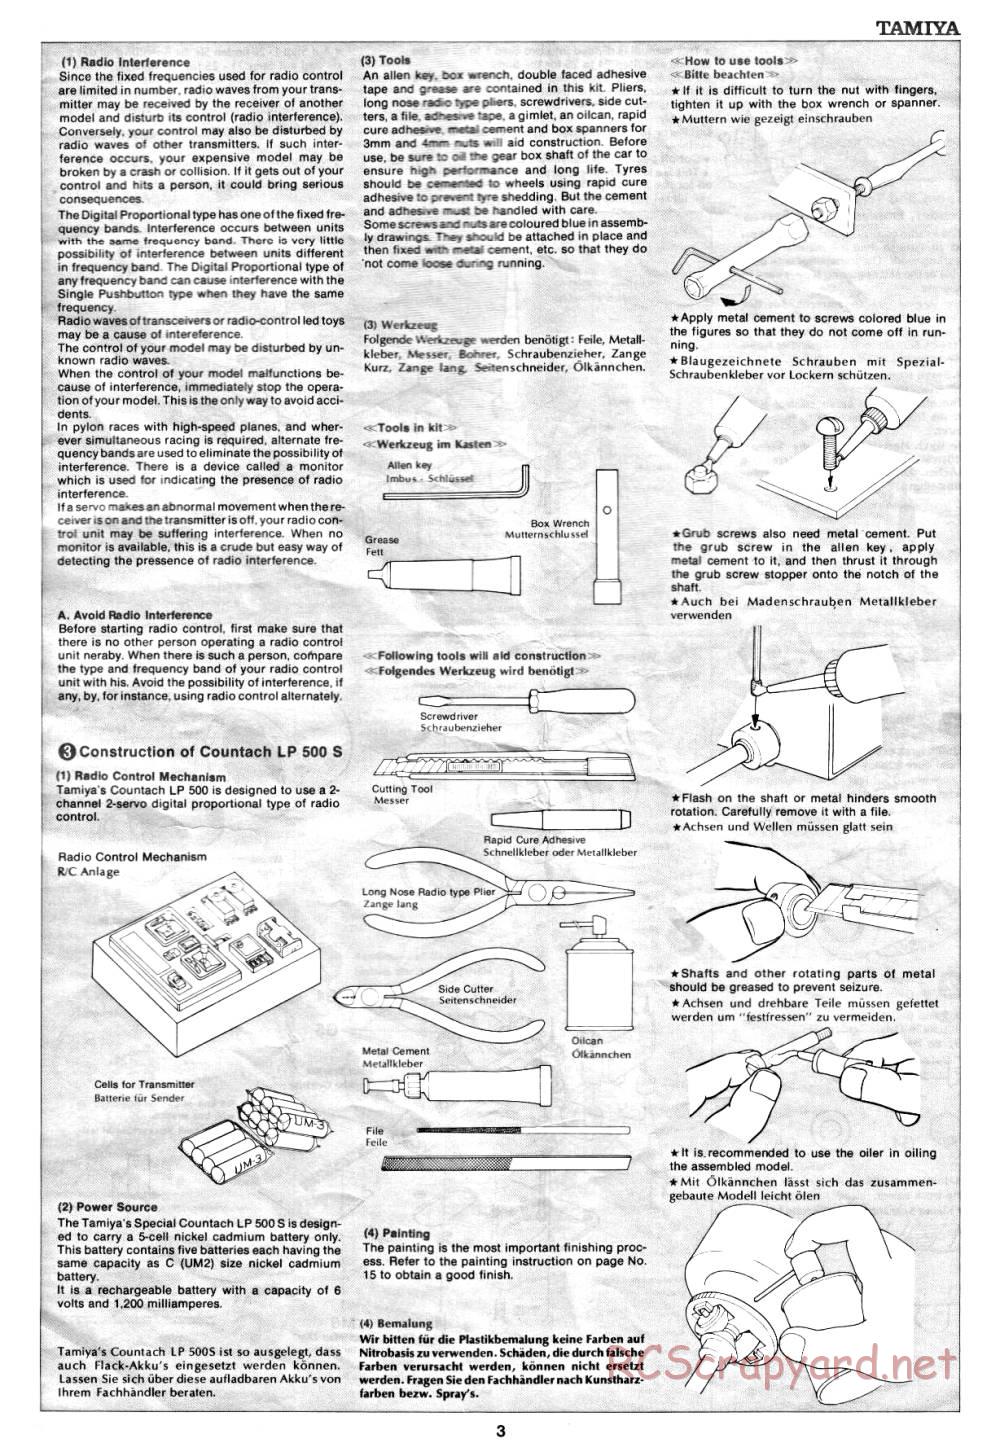 Tamiya - Lmbrghni Countach LP500S (CS) - 58008 - Manual - Page 3